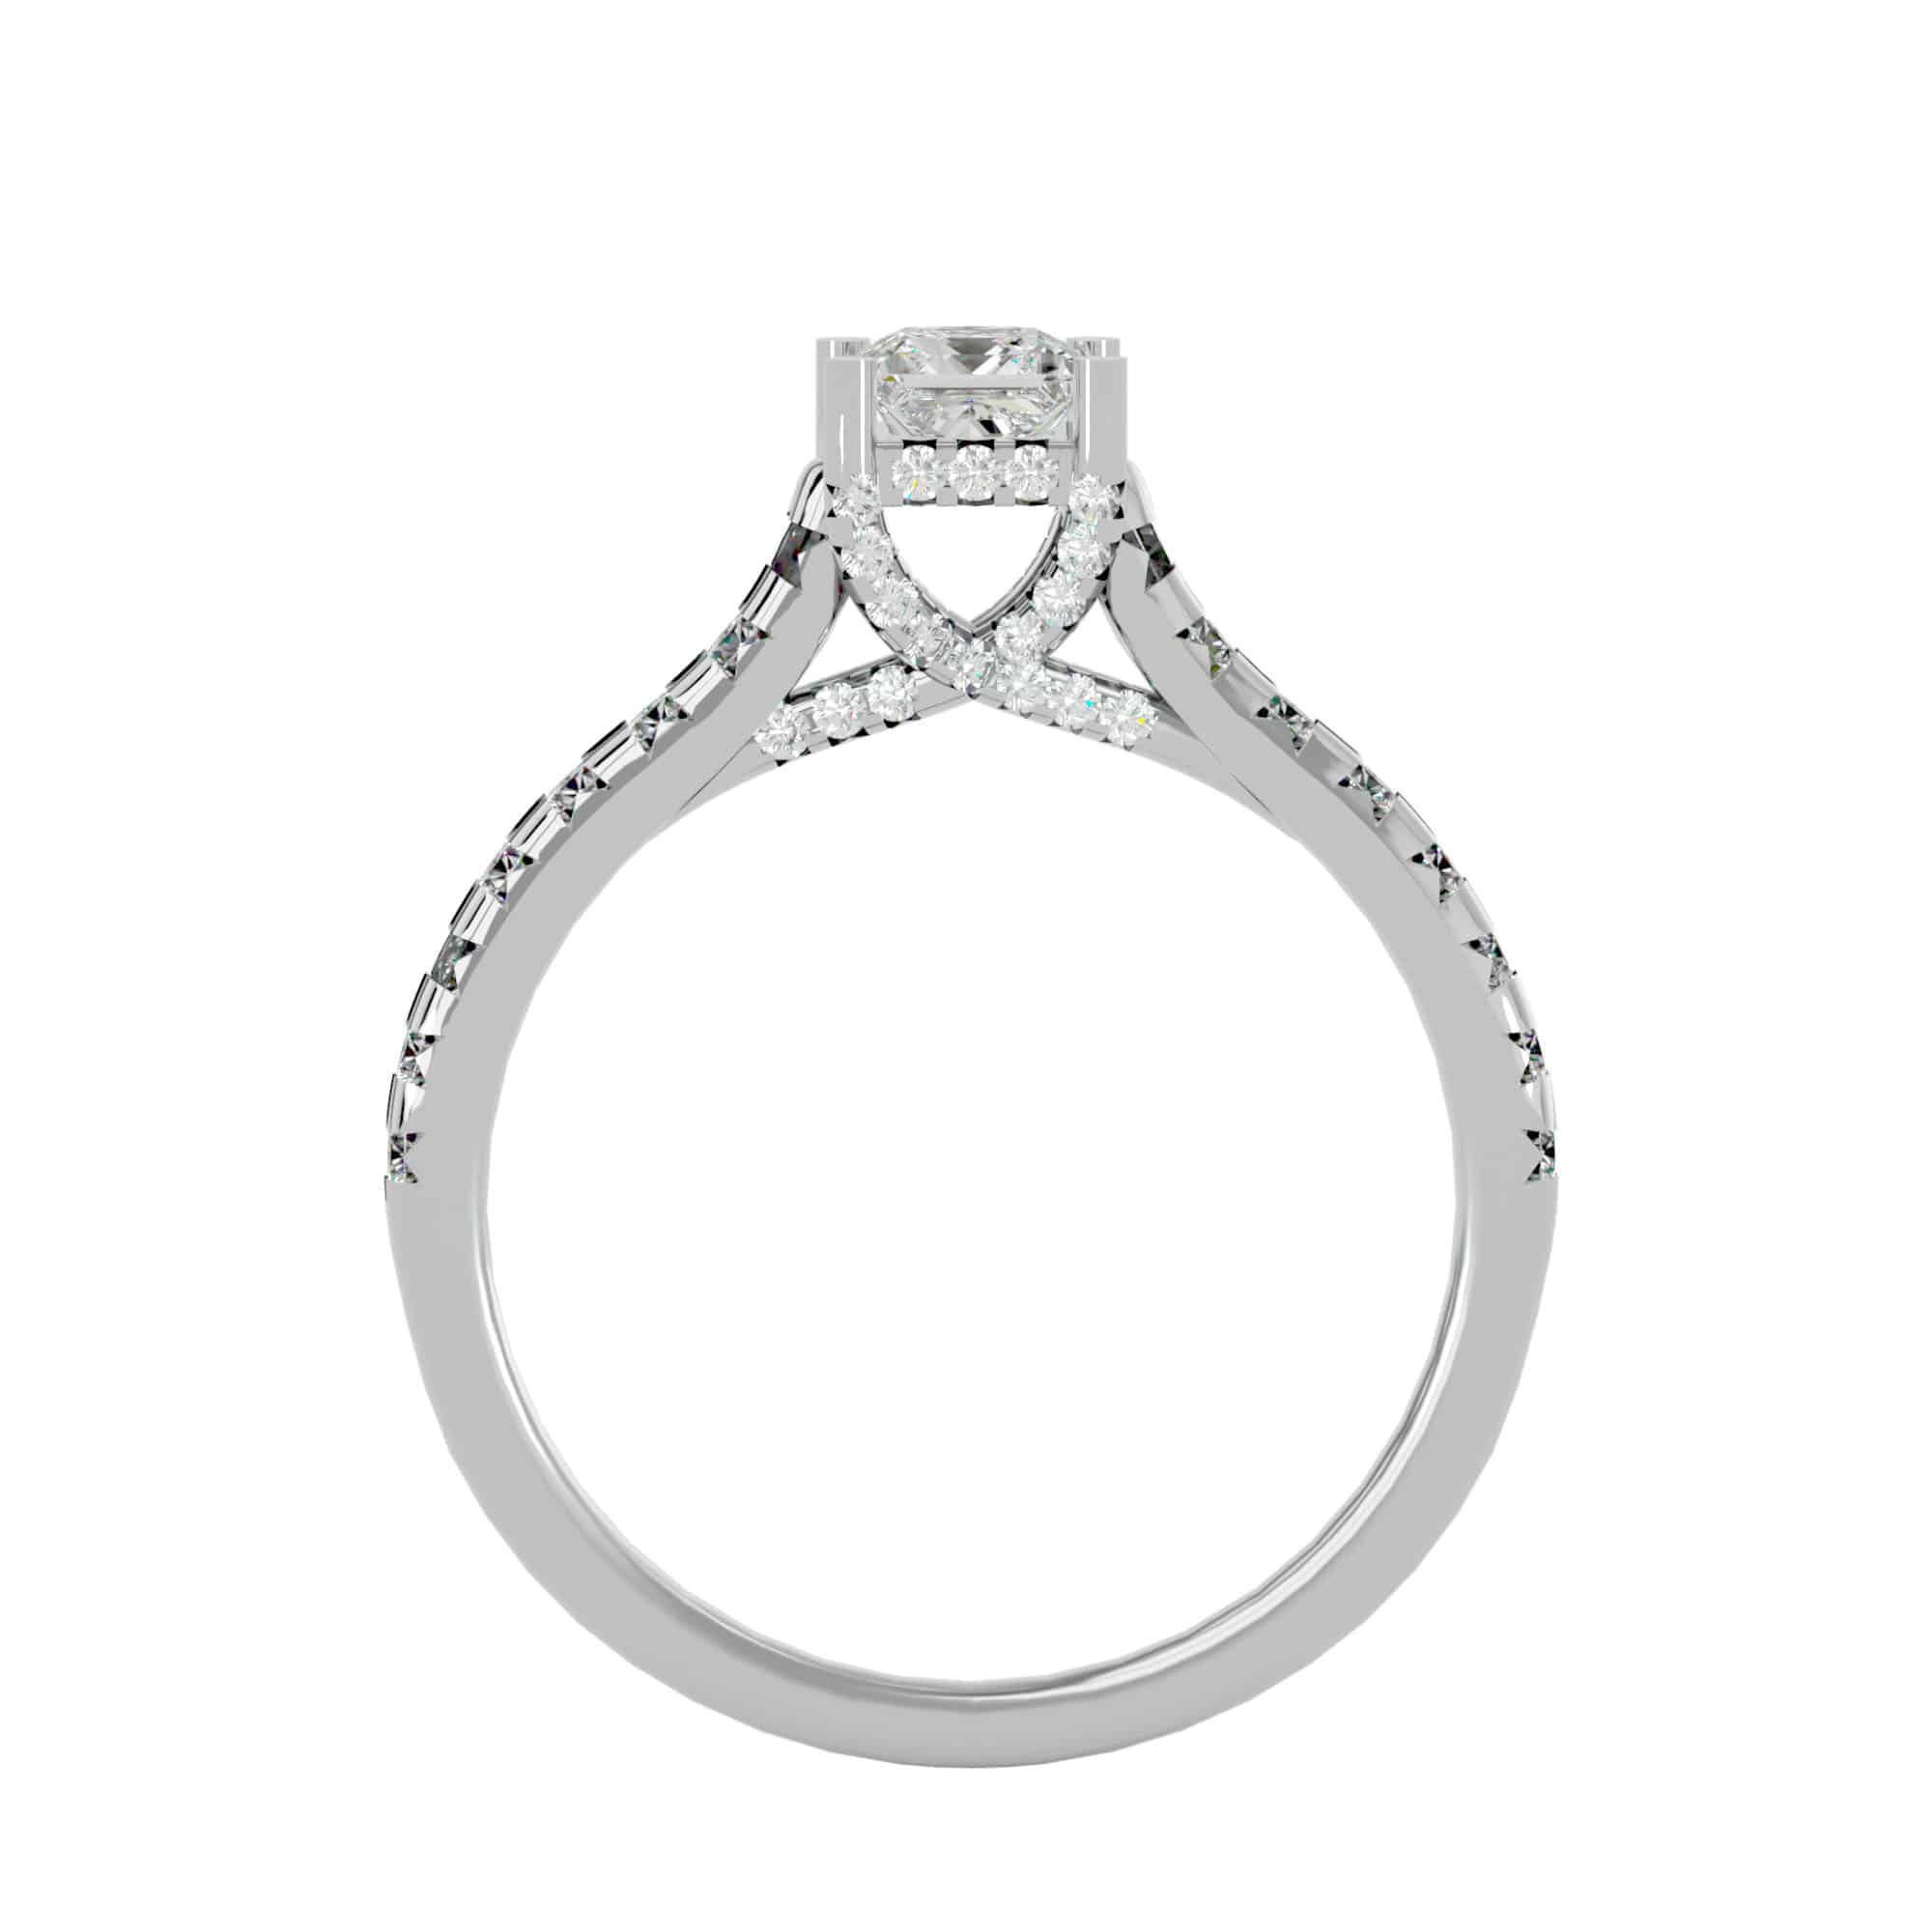 Lucy Princess Cut Engagement Ring Solitaire Pave Set Diamonds